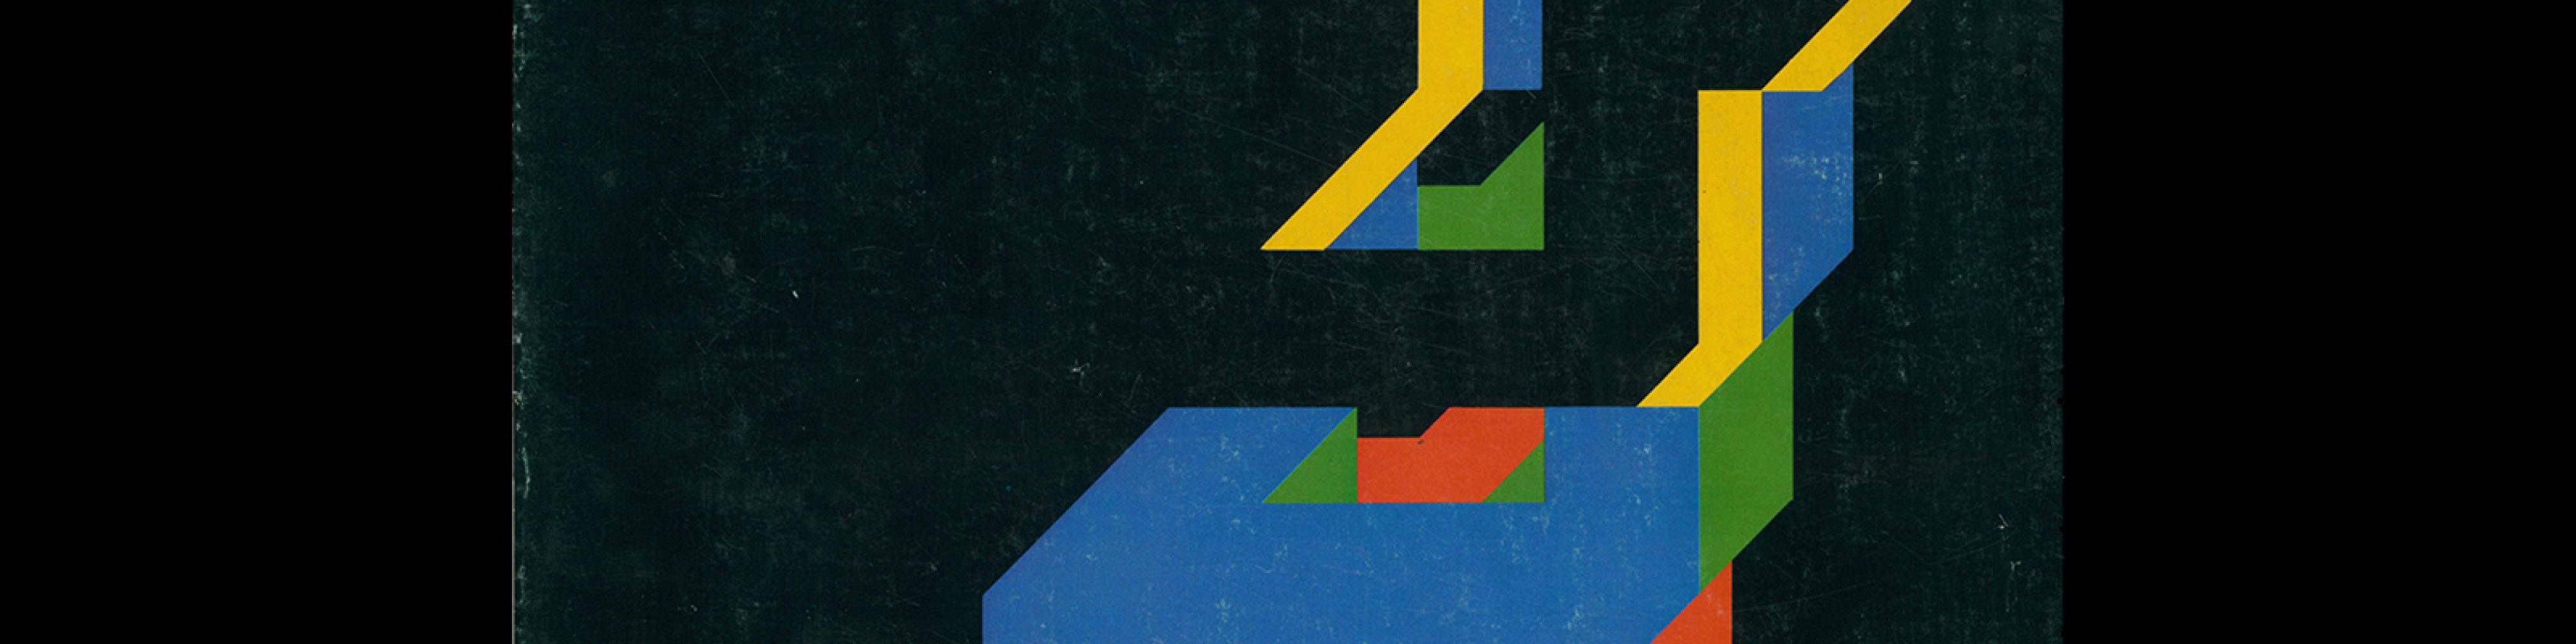 Quarterly Design No.7 Autumn 1974. Cover design by Toshihiro Katayama